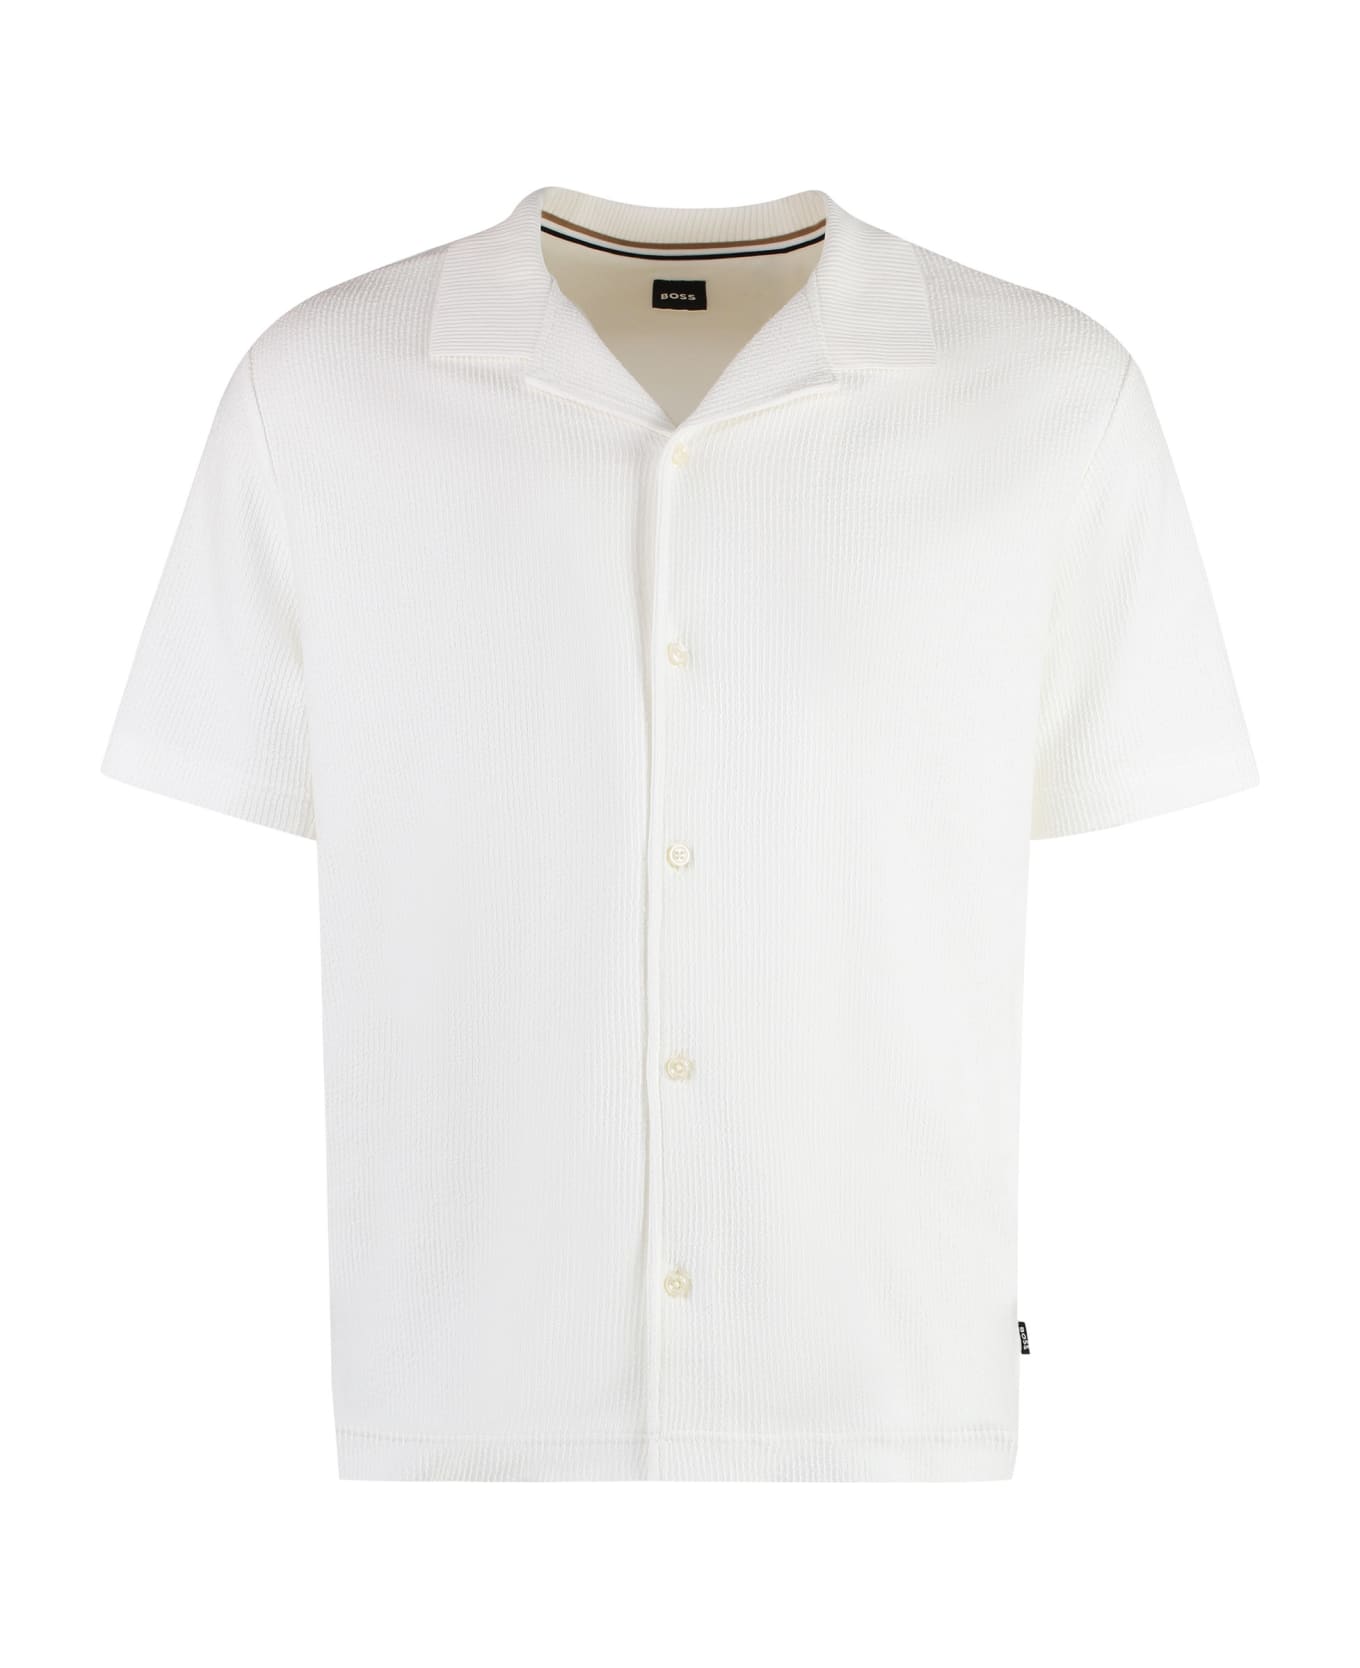 Hugo Boss Short Sleeve Cotton Shirt - White